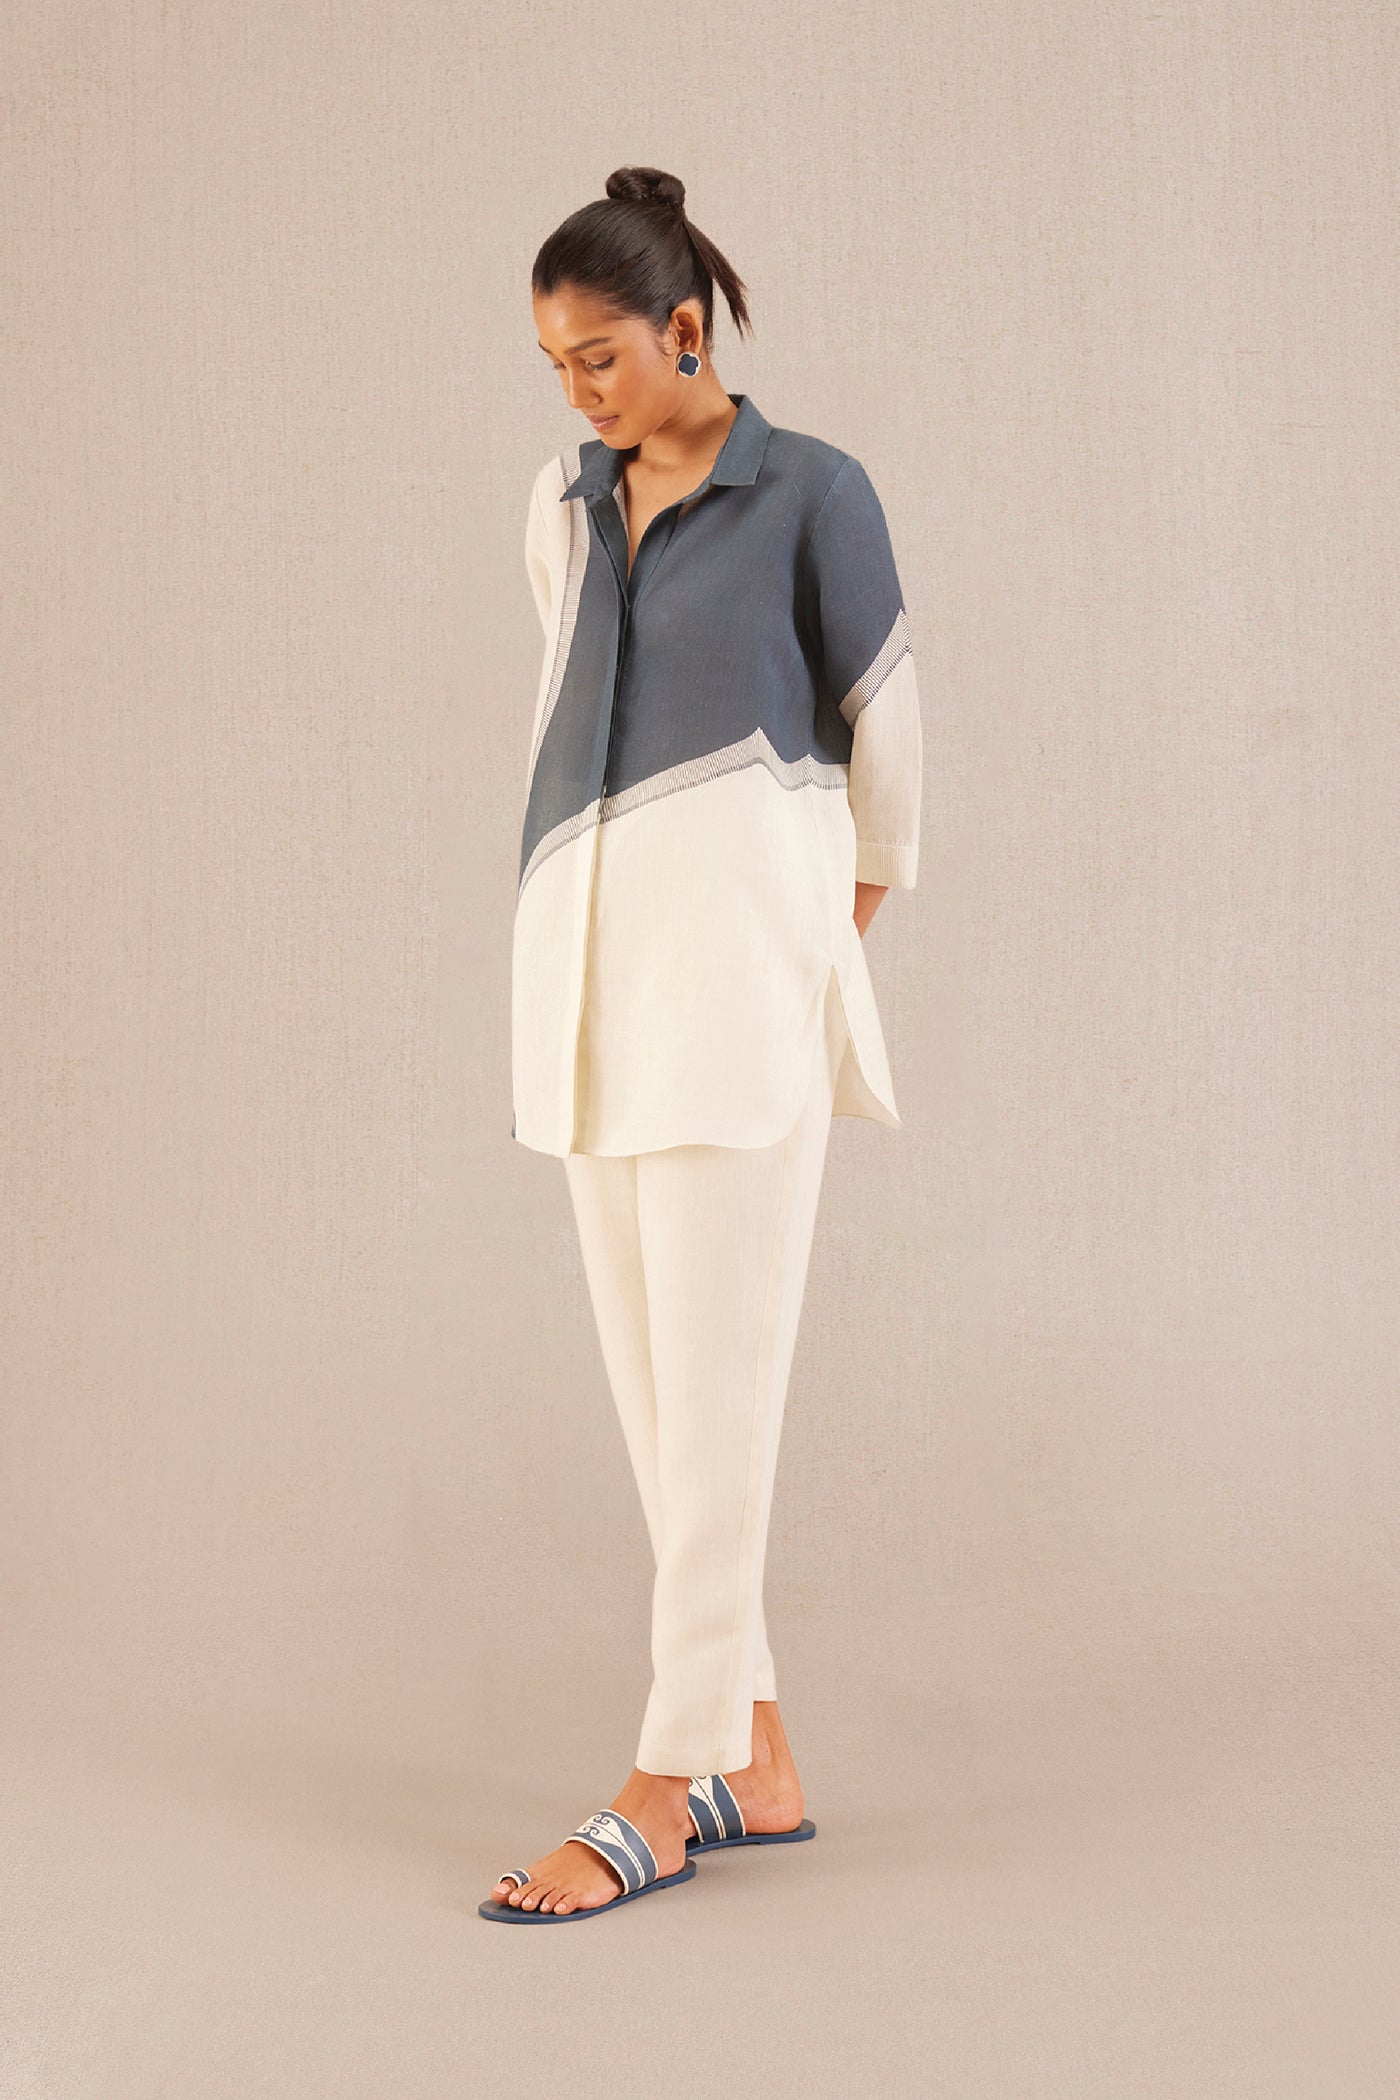 AMPM Iqra Shirt Set Slate Blue indian designer wear online shopping melange singapore